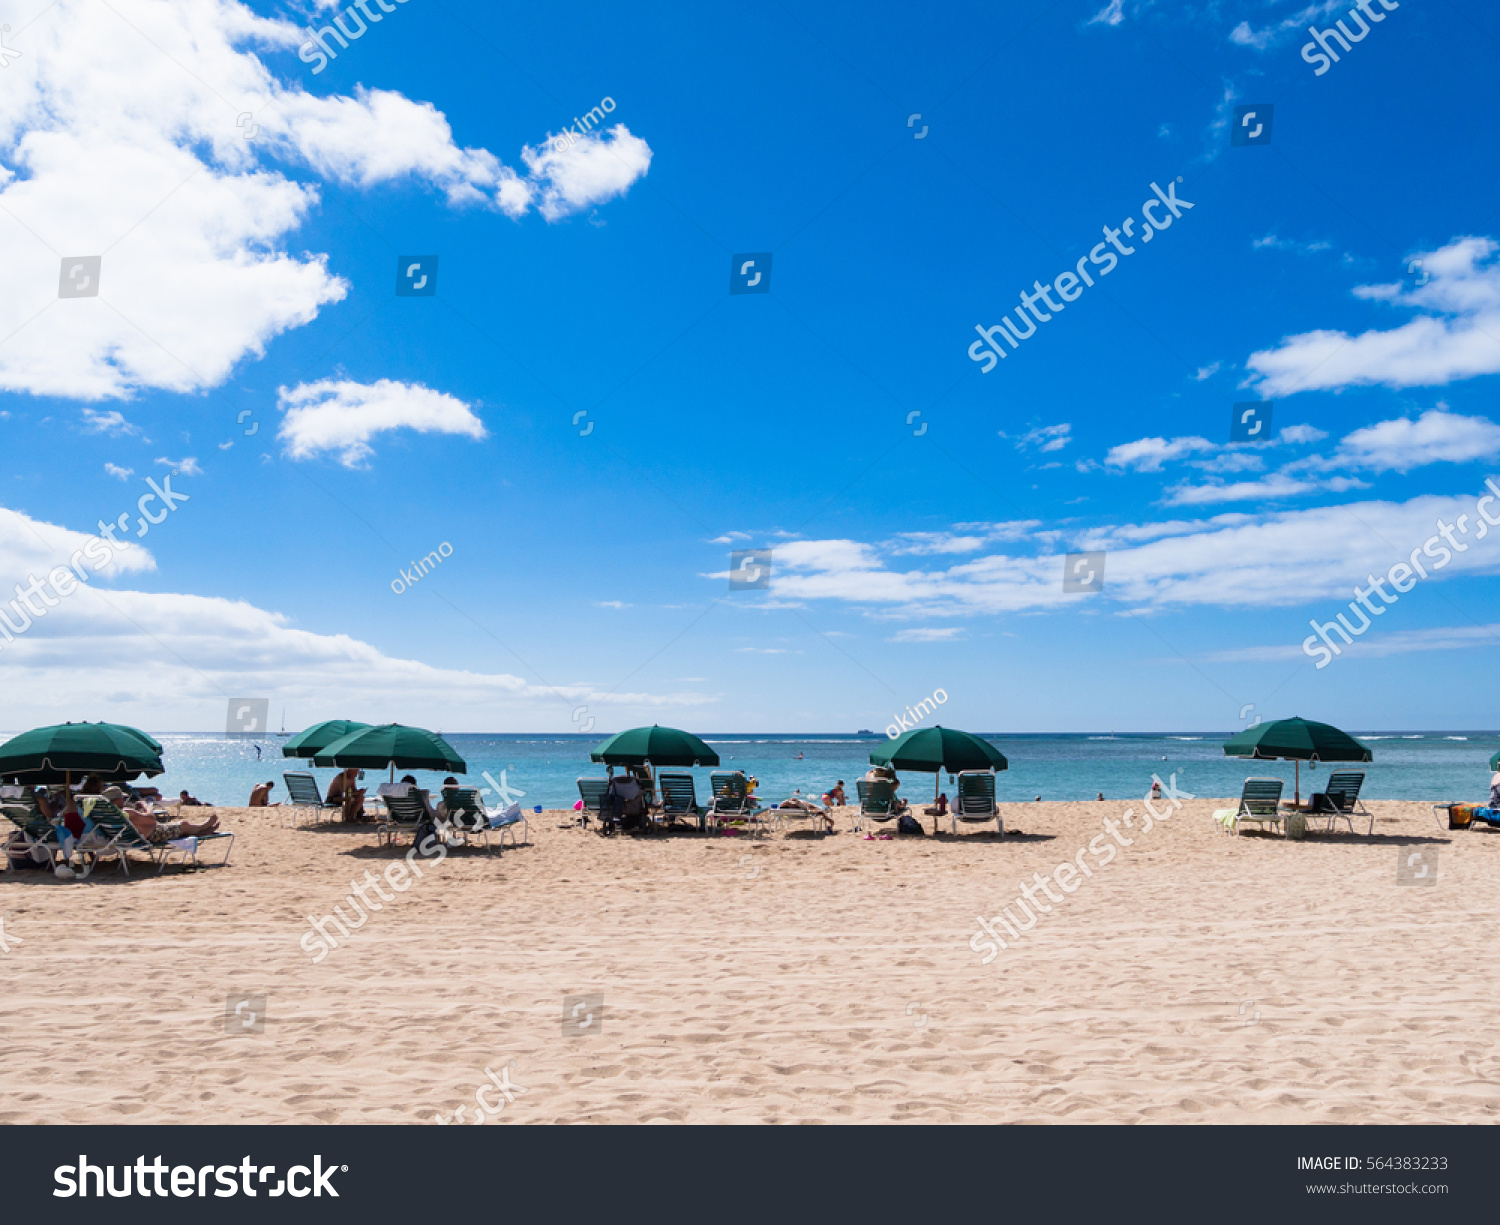 Fort Derussy Boardwalk On Waikiki Beach Stock Photo 564383233 ...